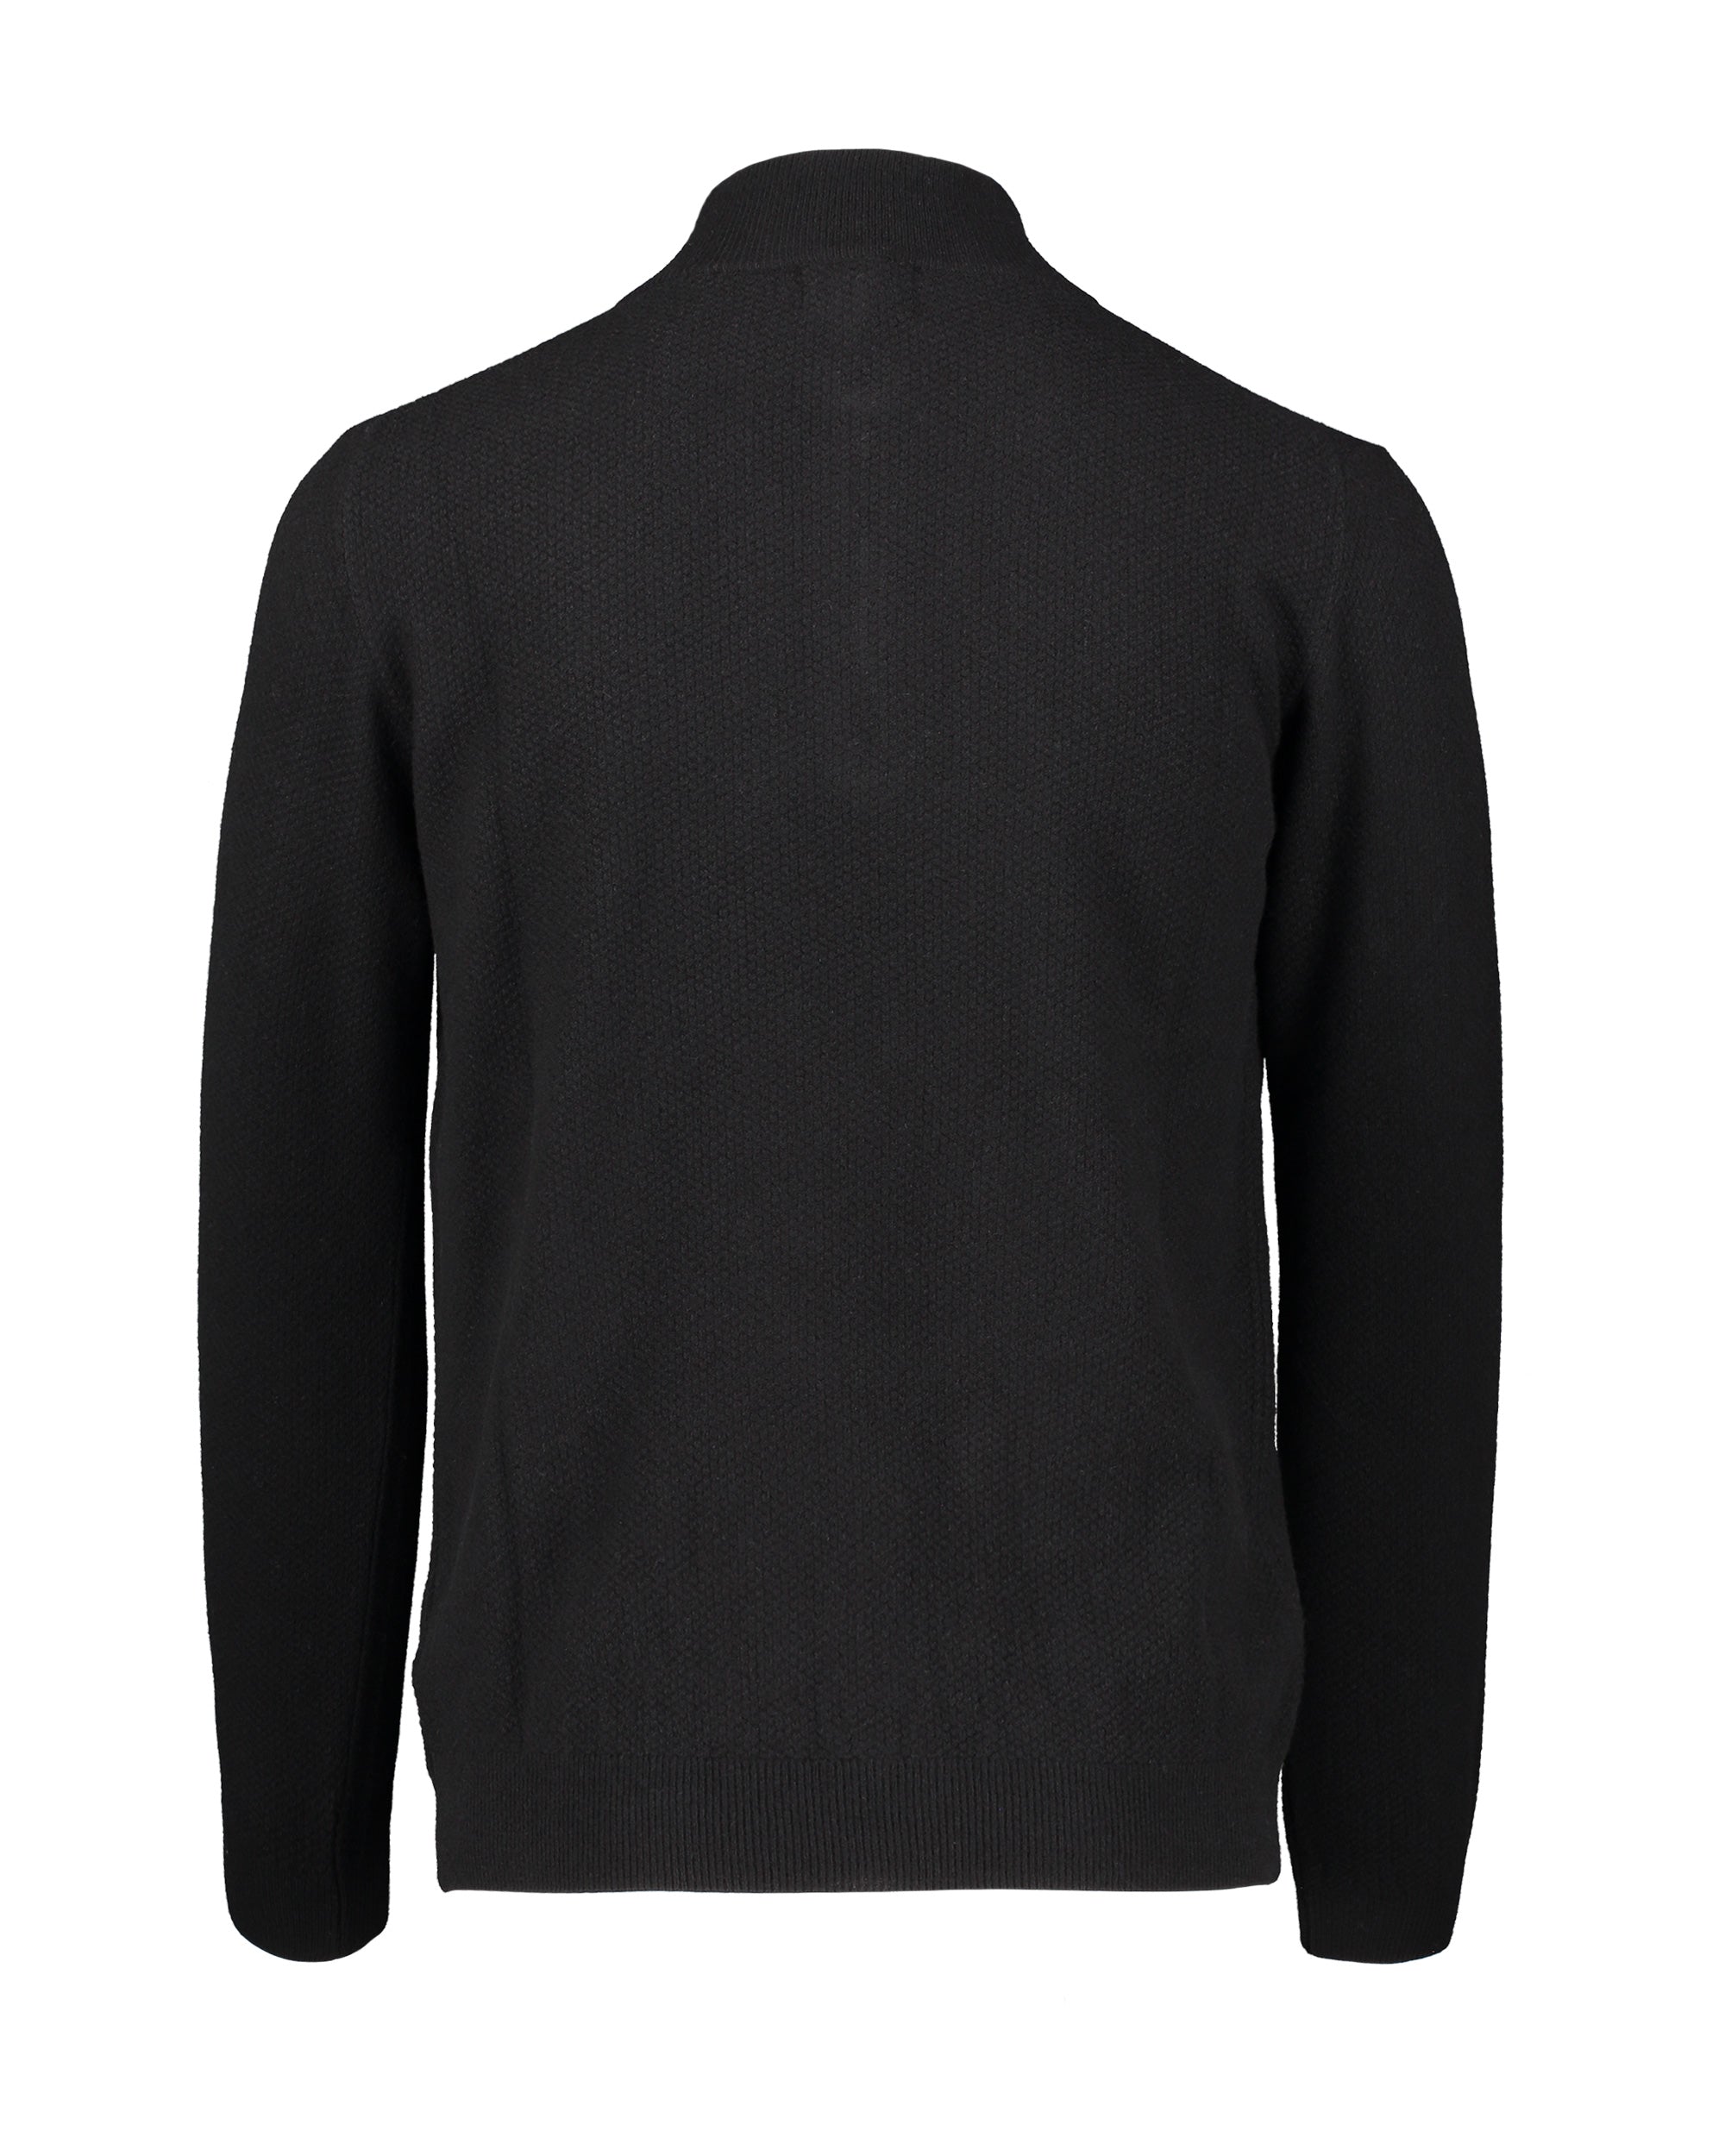 Gunvald Black Half Zip Sweater